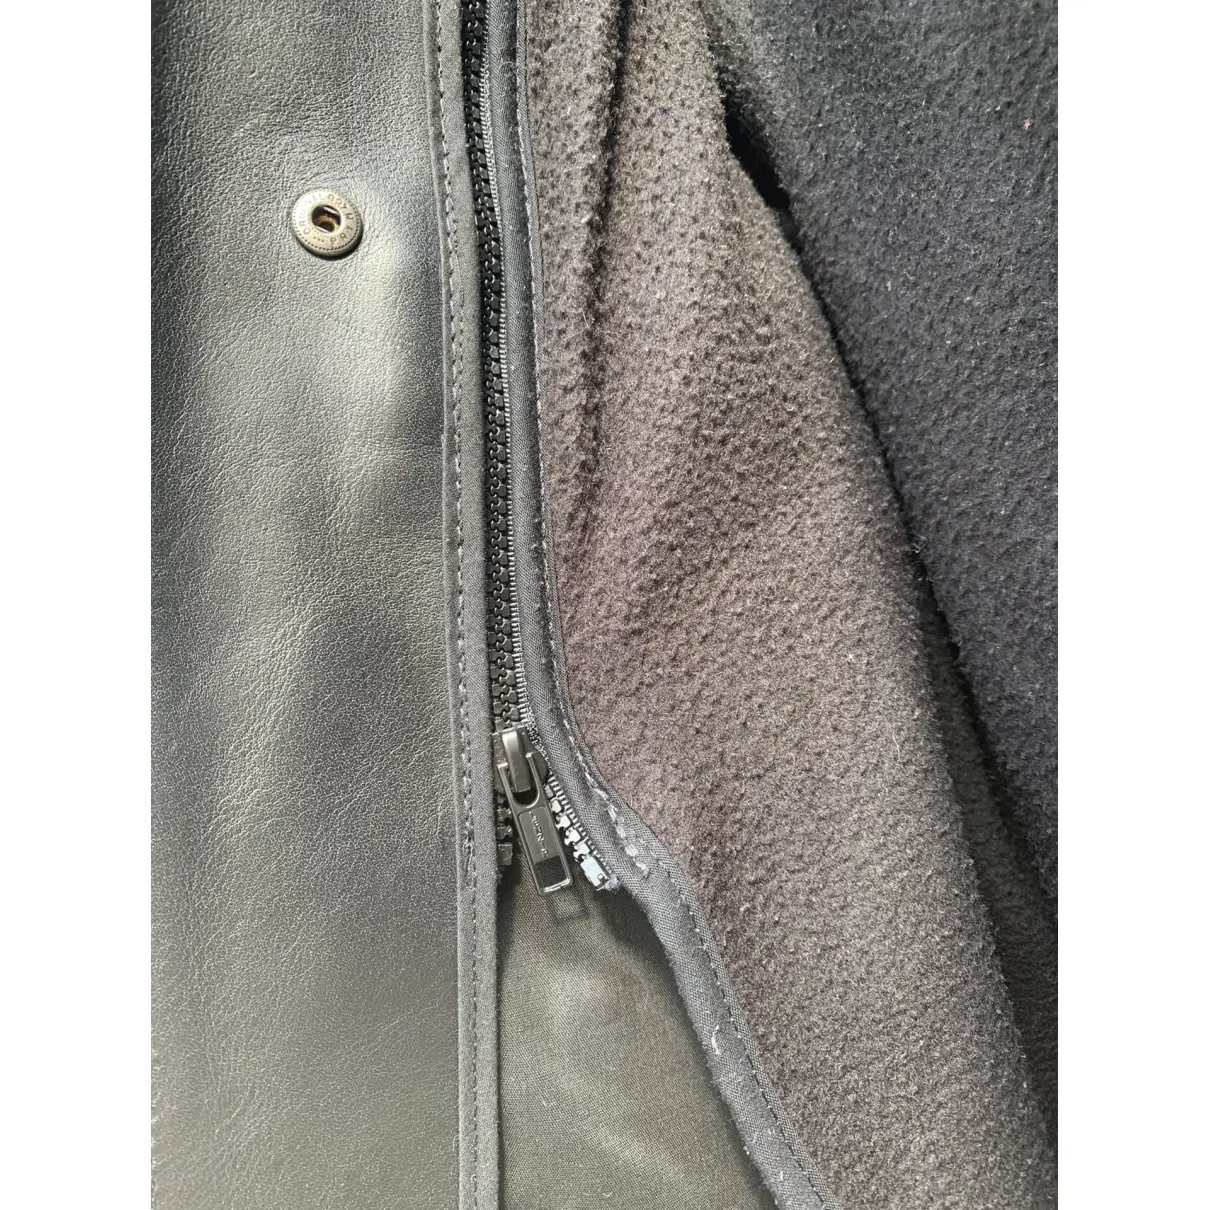 Buy Vanson Leathers Leather jacket online